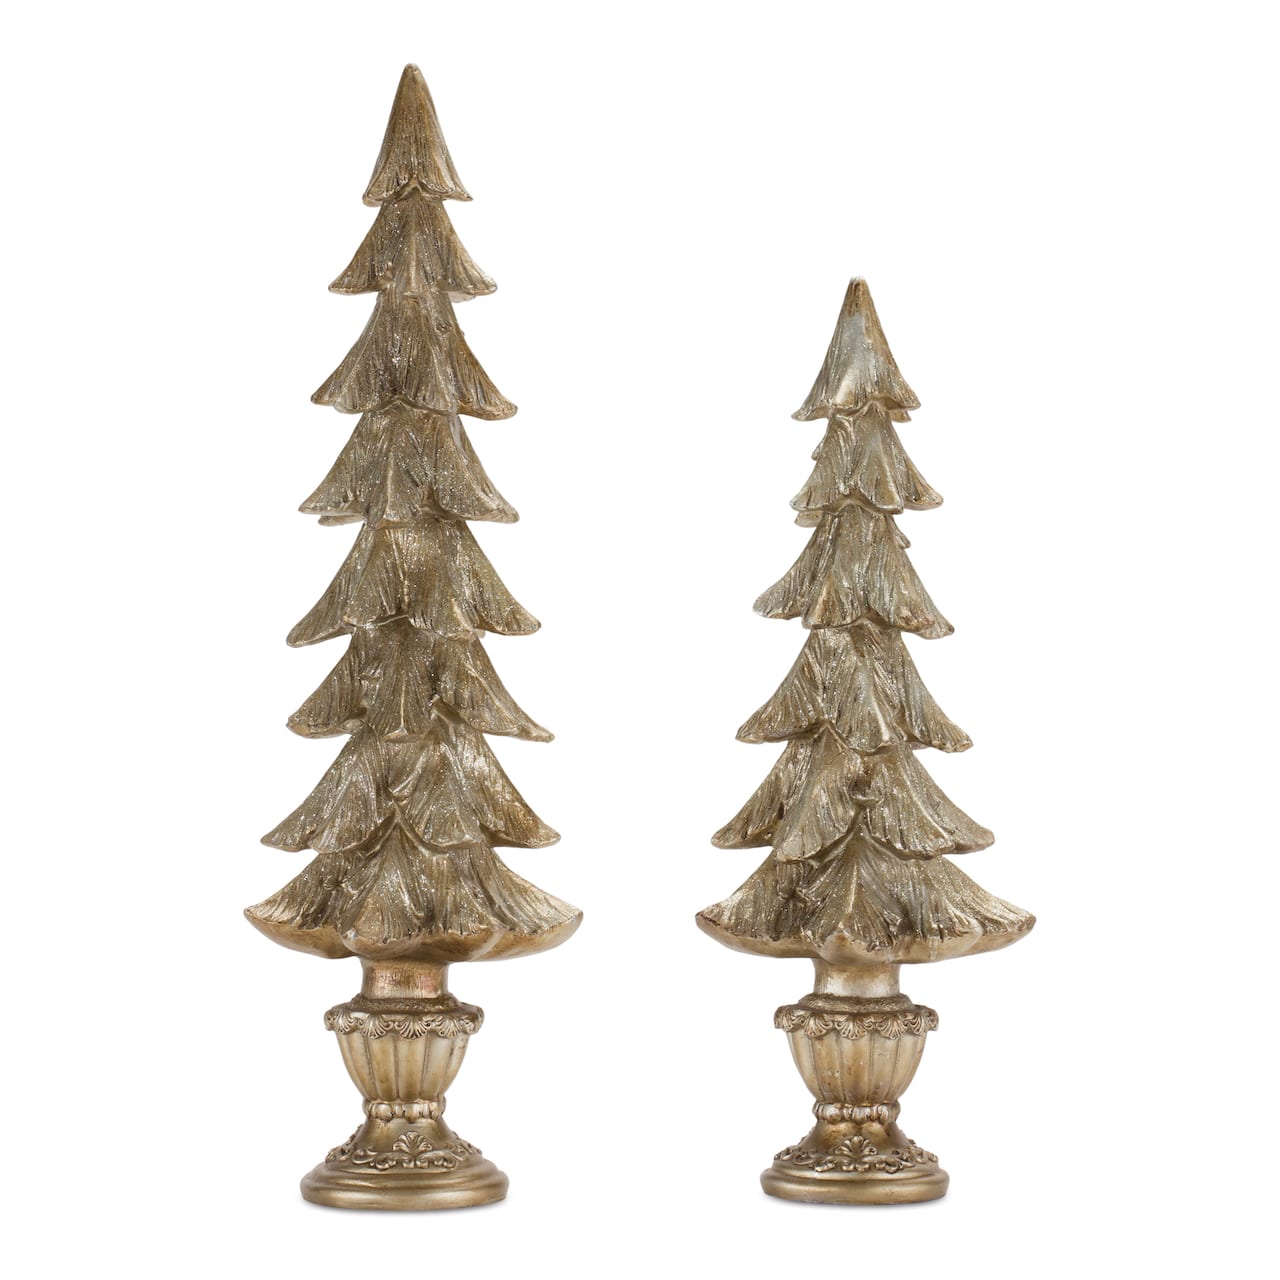 Pine Trees on Pedestals Tabletop Décor Set, 23.25